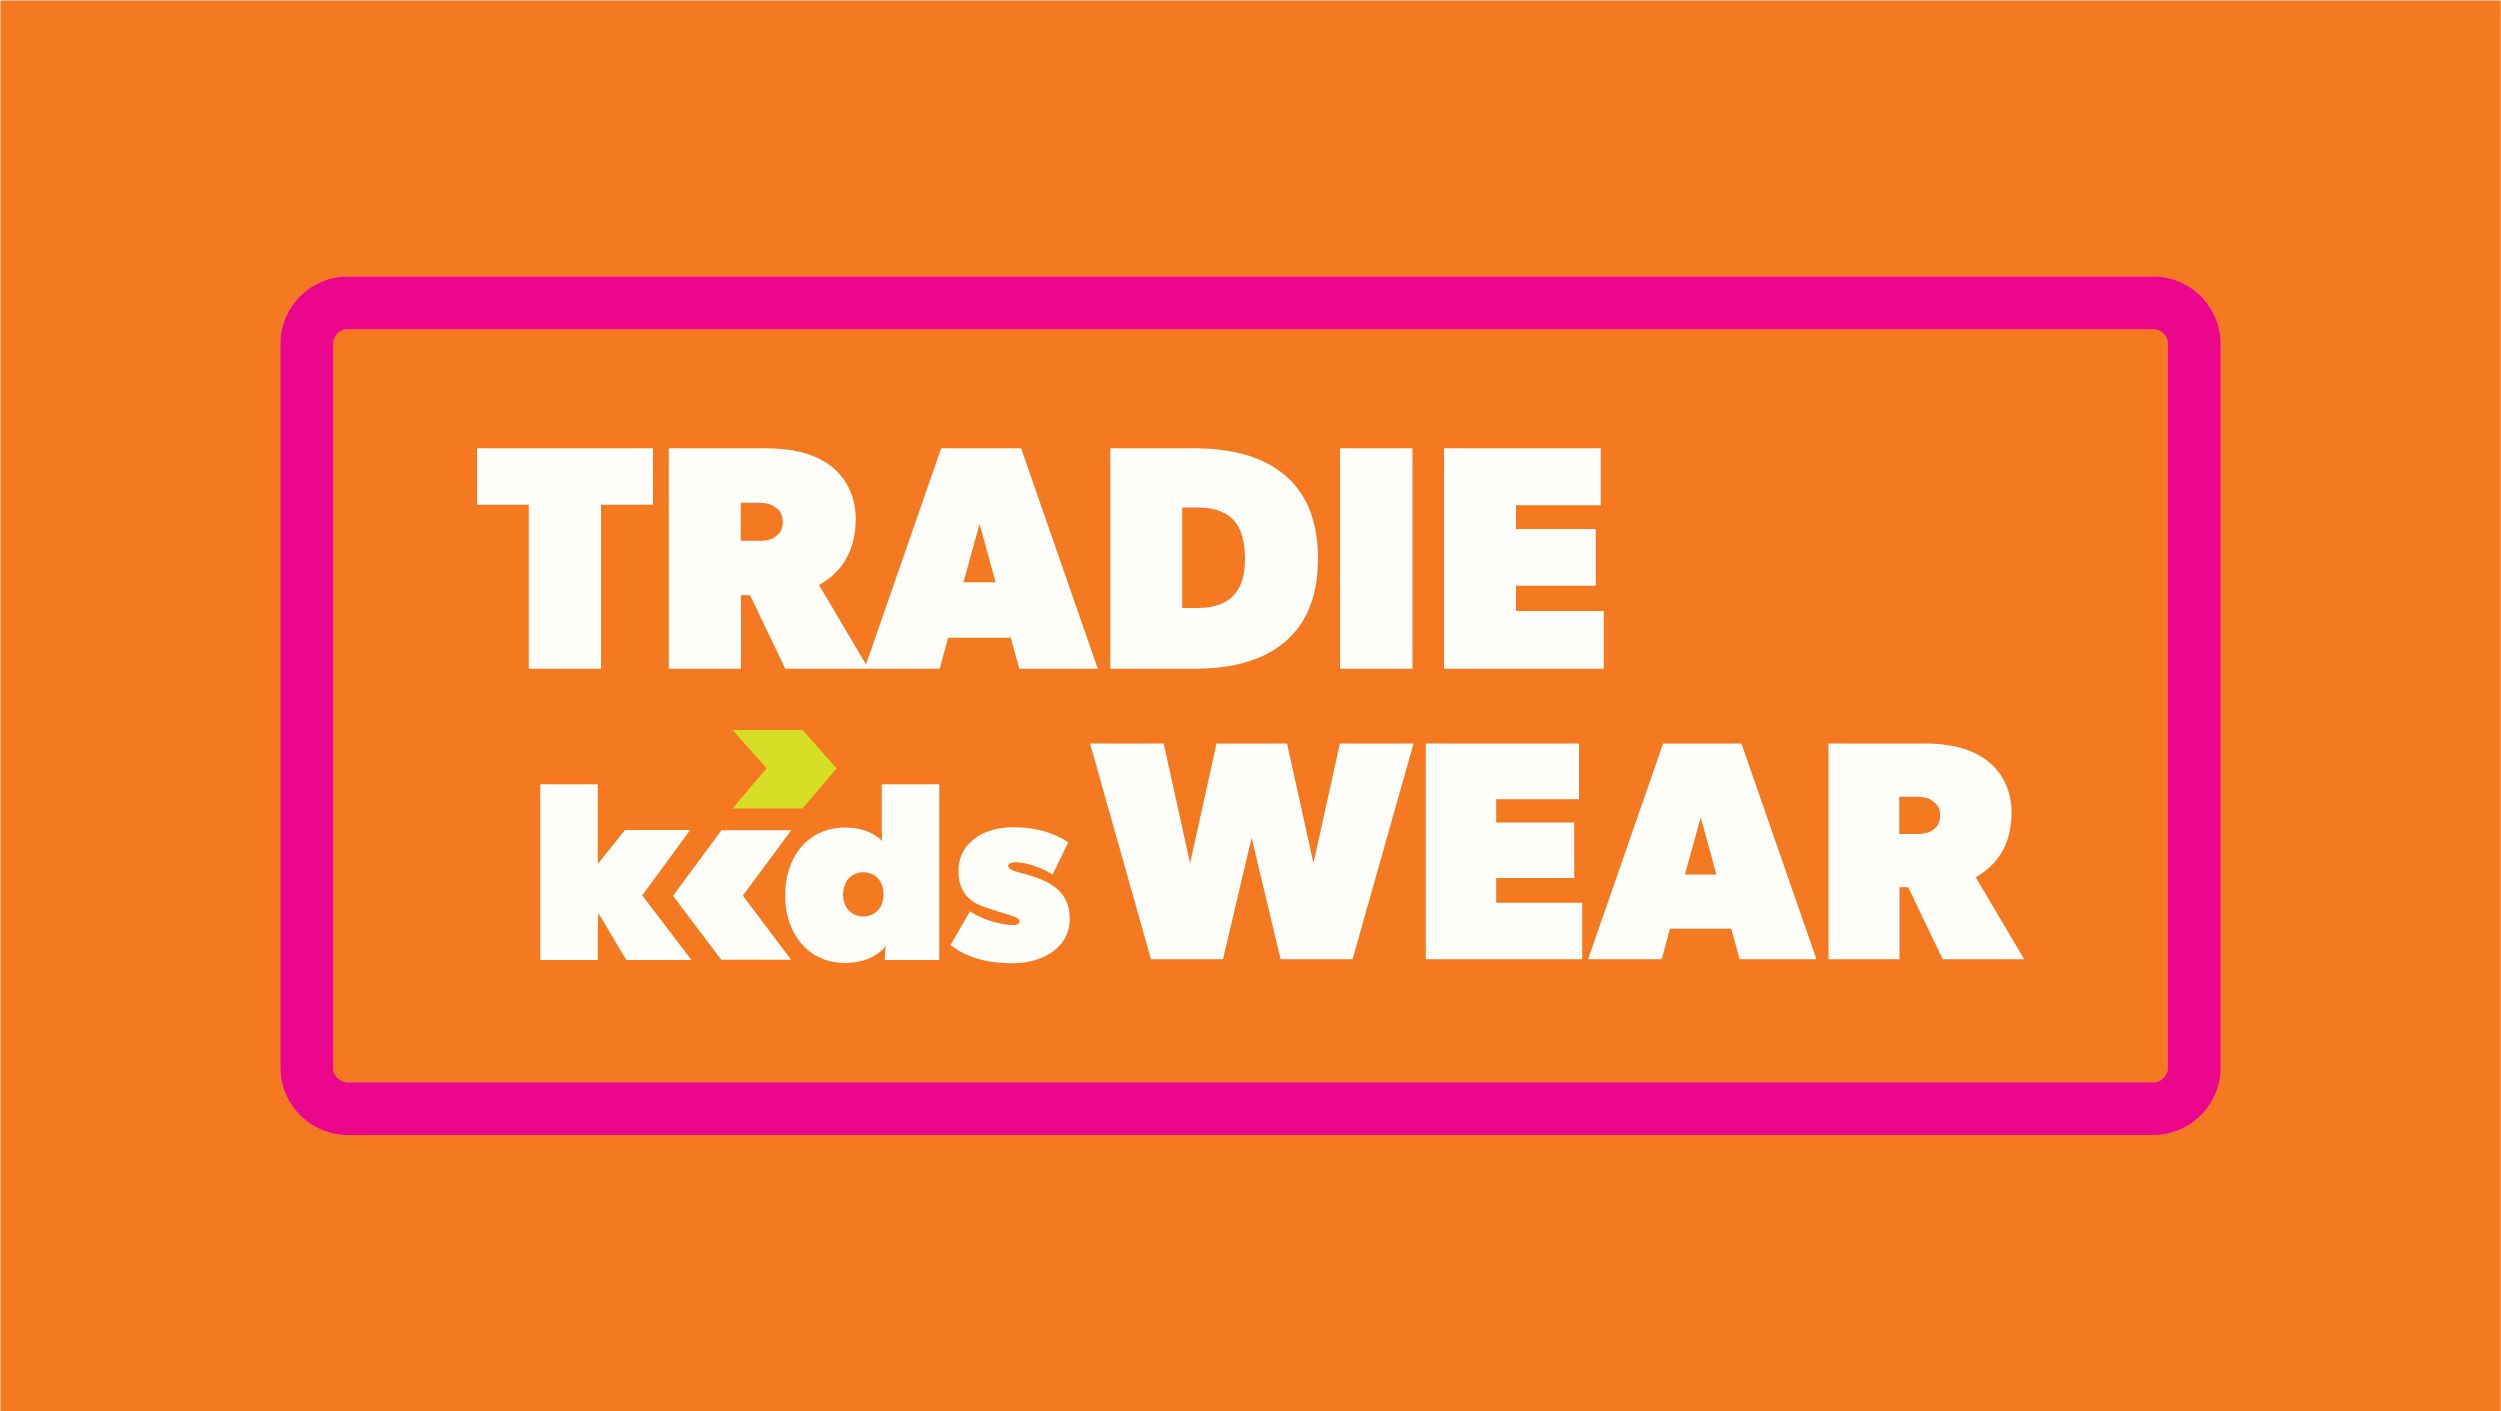 Tradie Kidswear